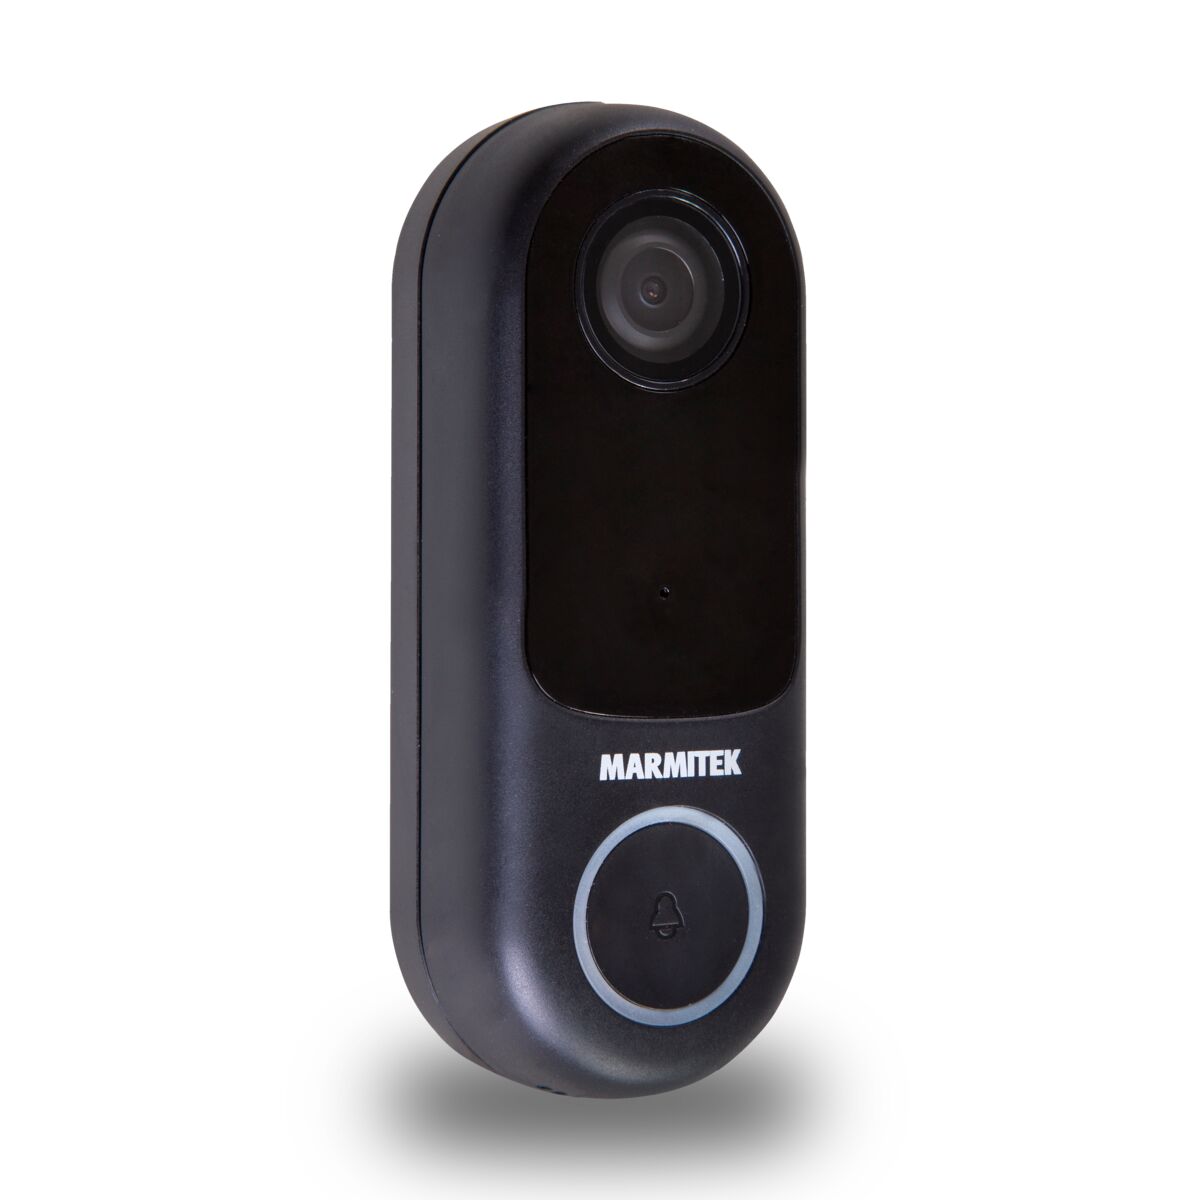 Buzz LO - Doorbell camera - Side View Image left angle | Marmitek